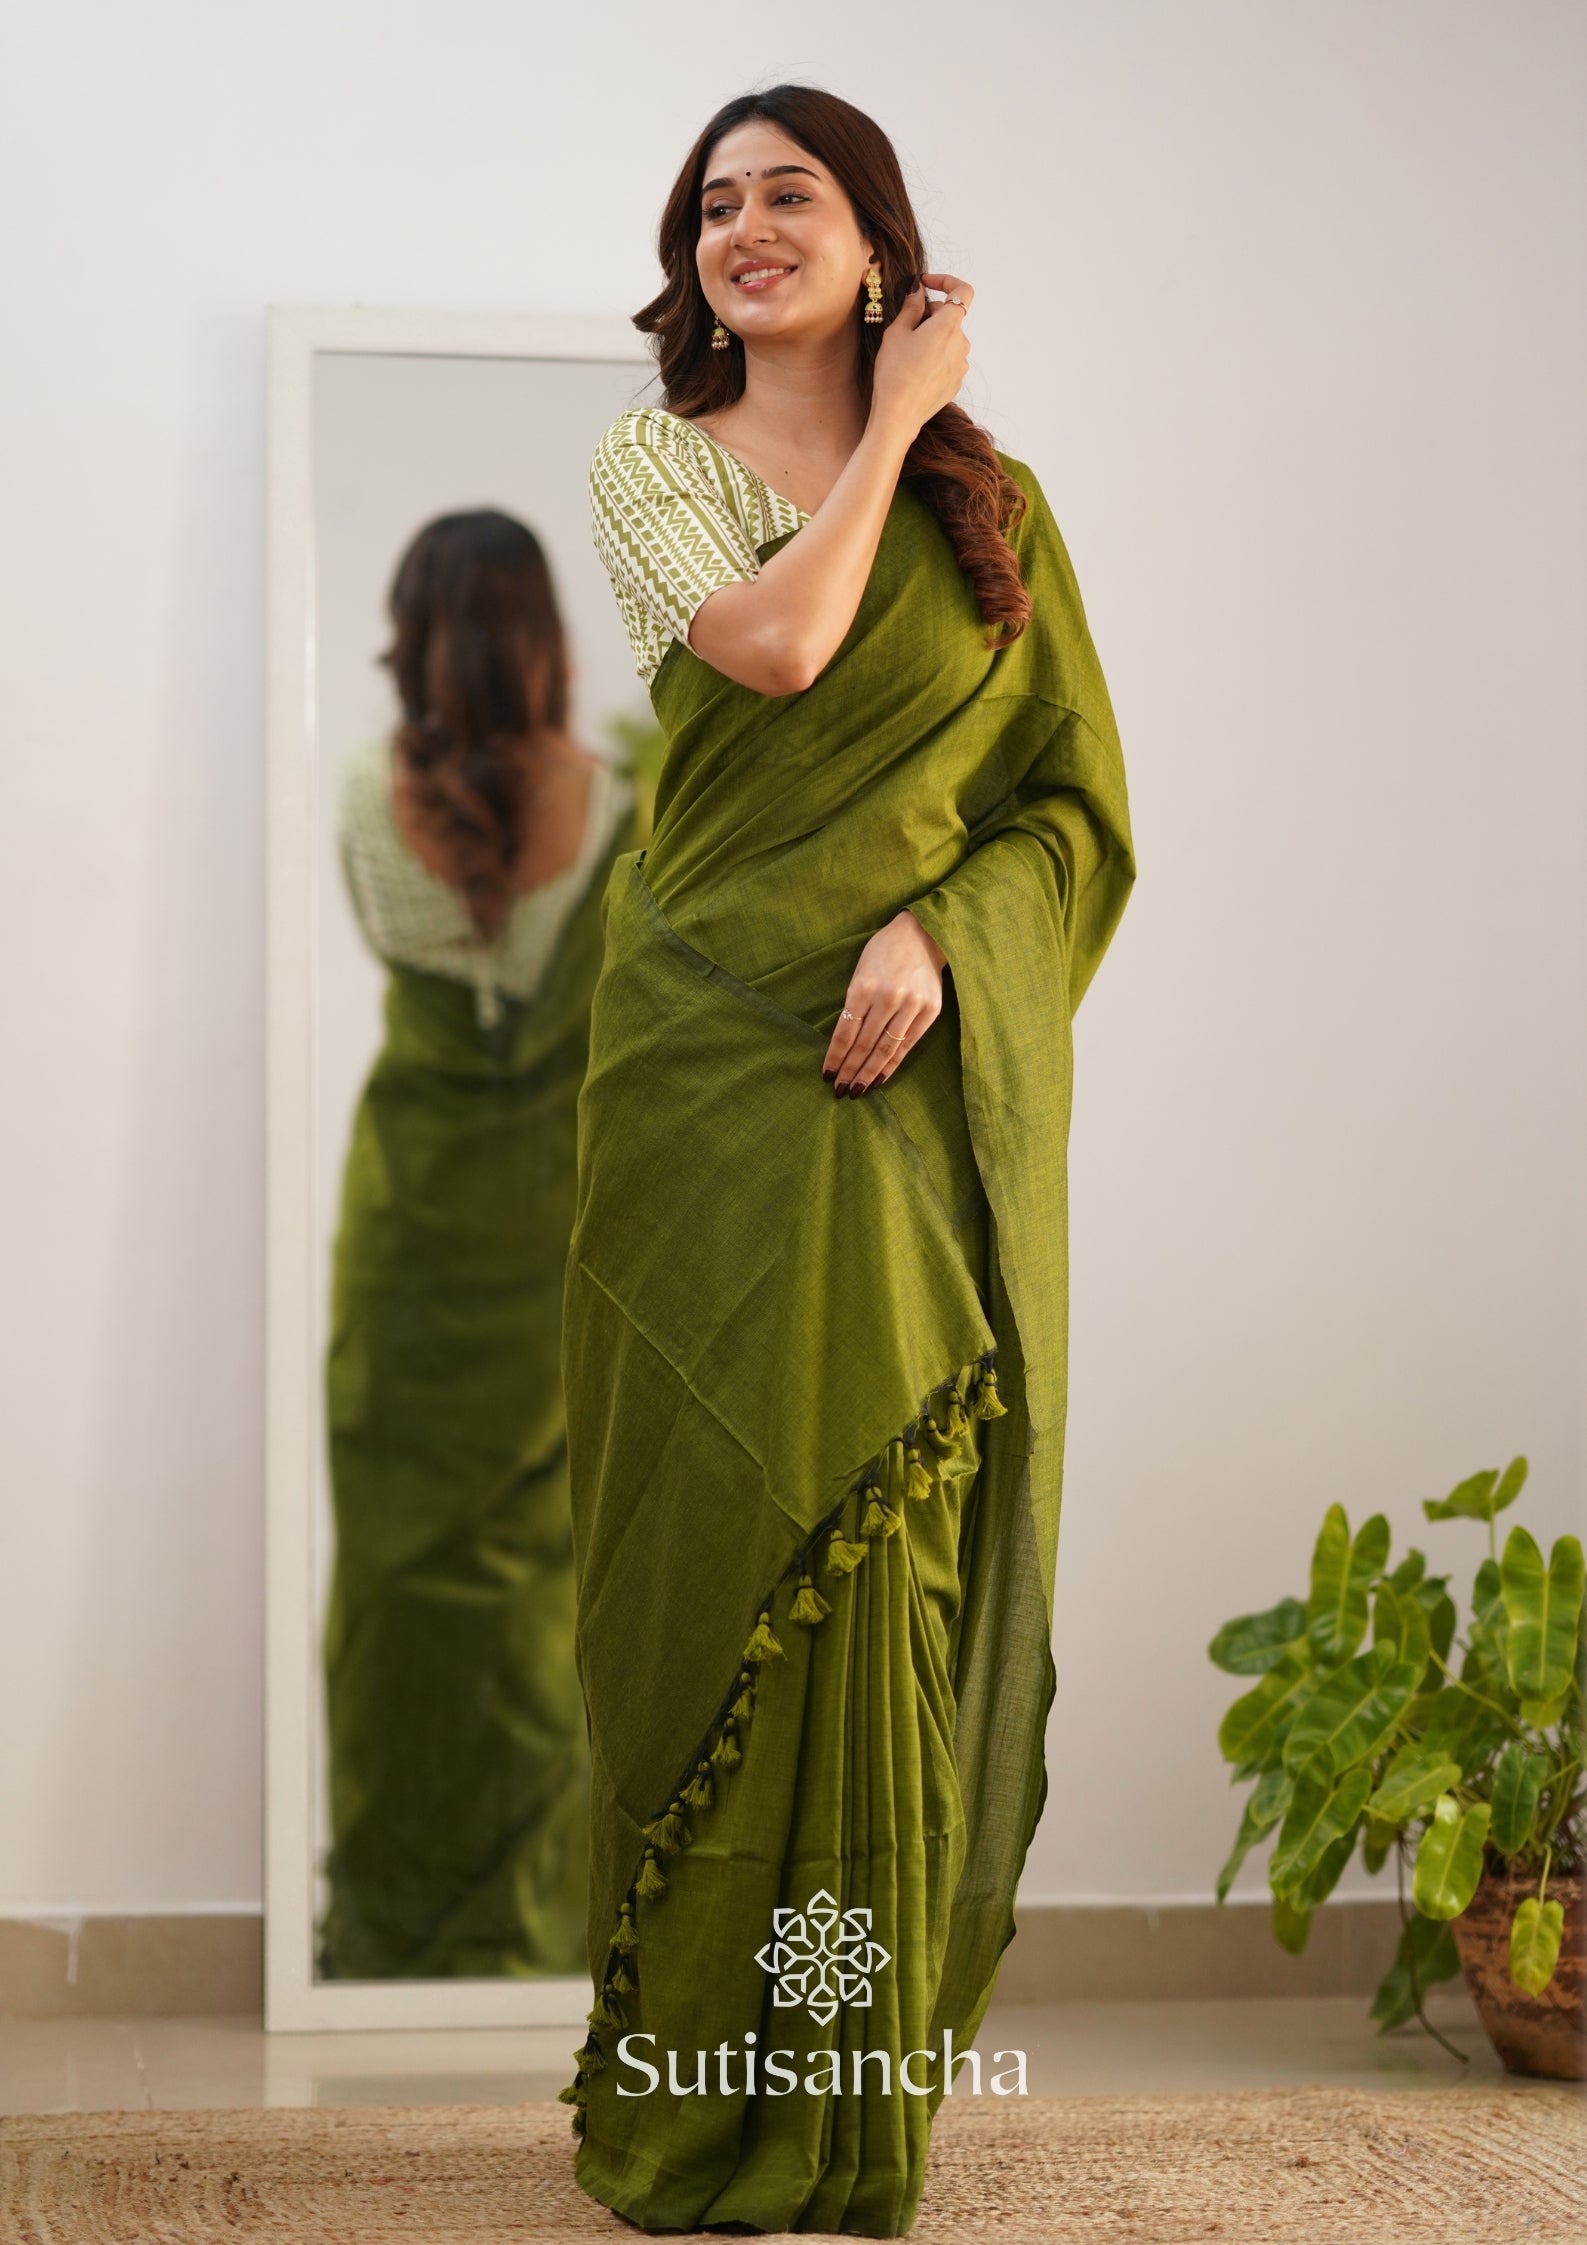 Sutisancha Mahendi Khadi With Design Blouse